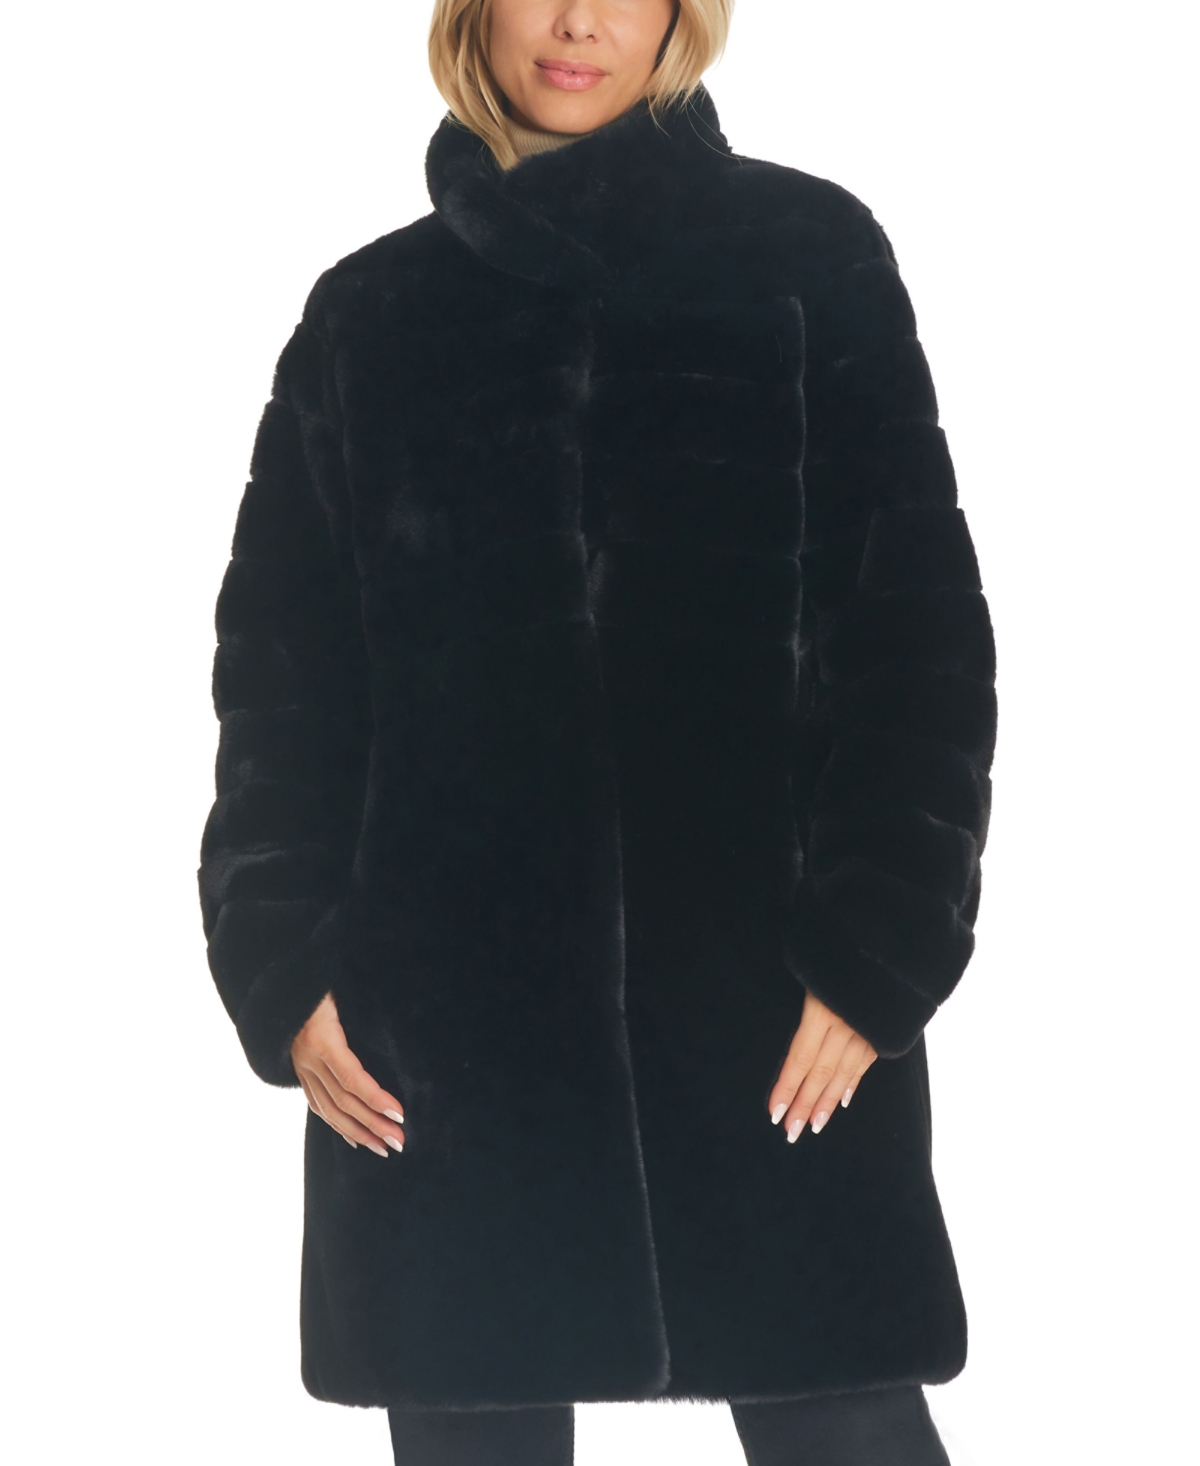 Women's Petite Faux-Fur Coat - Black